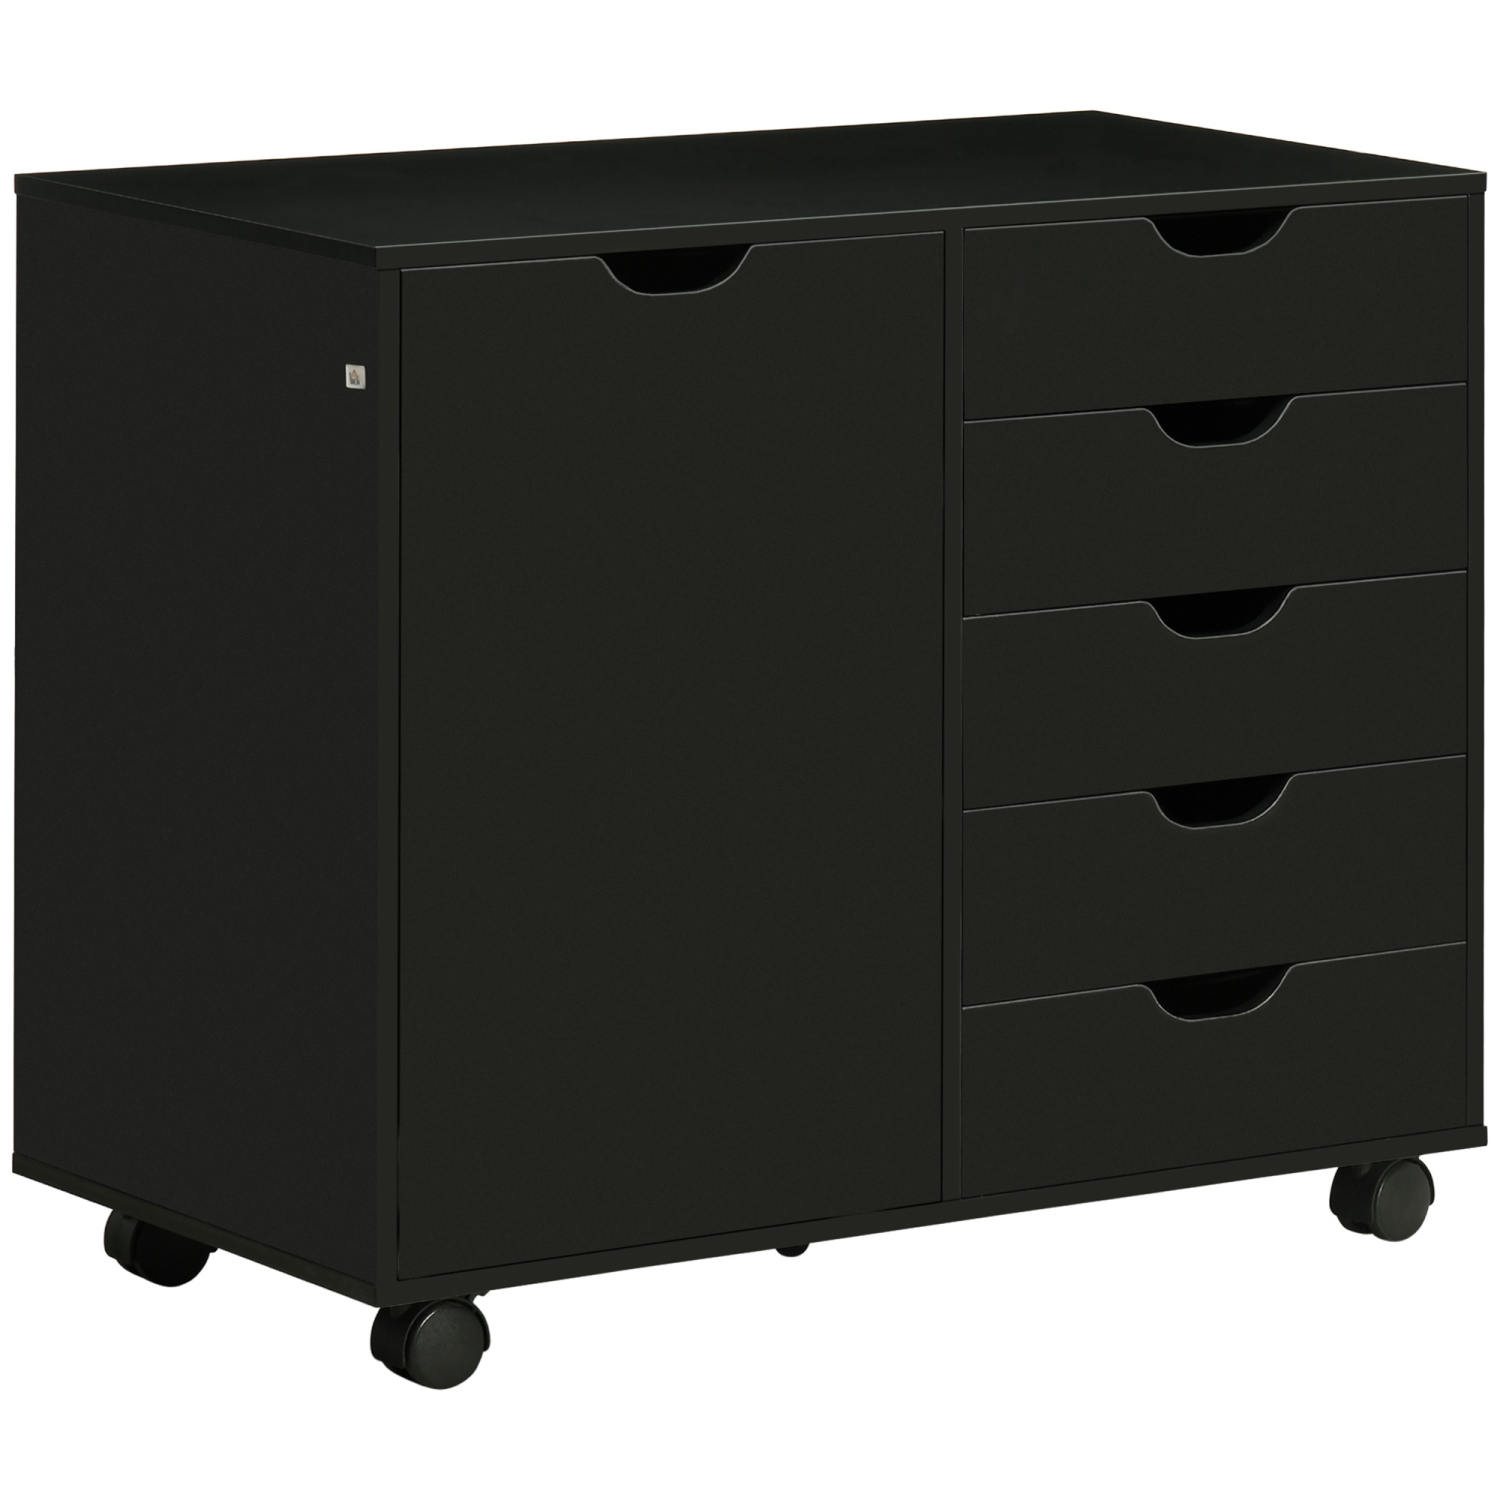 HOMCOM Modern Mobile 5-Drawer Chest with Door, Storage Cabinet, Dresser on Wheels, Printer Stand for Home Office, Black